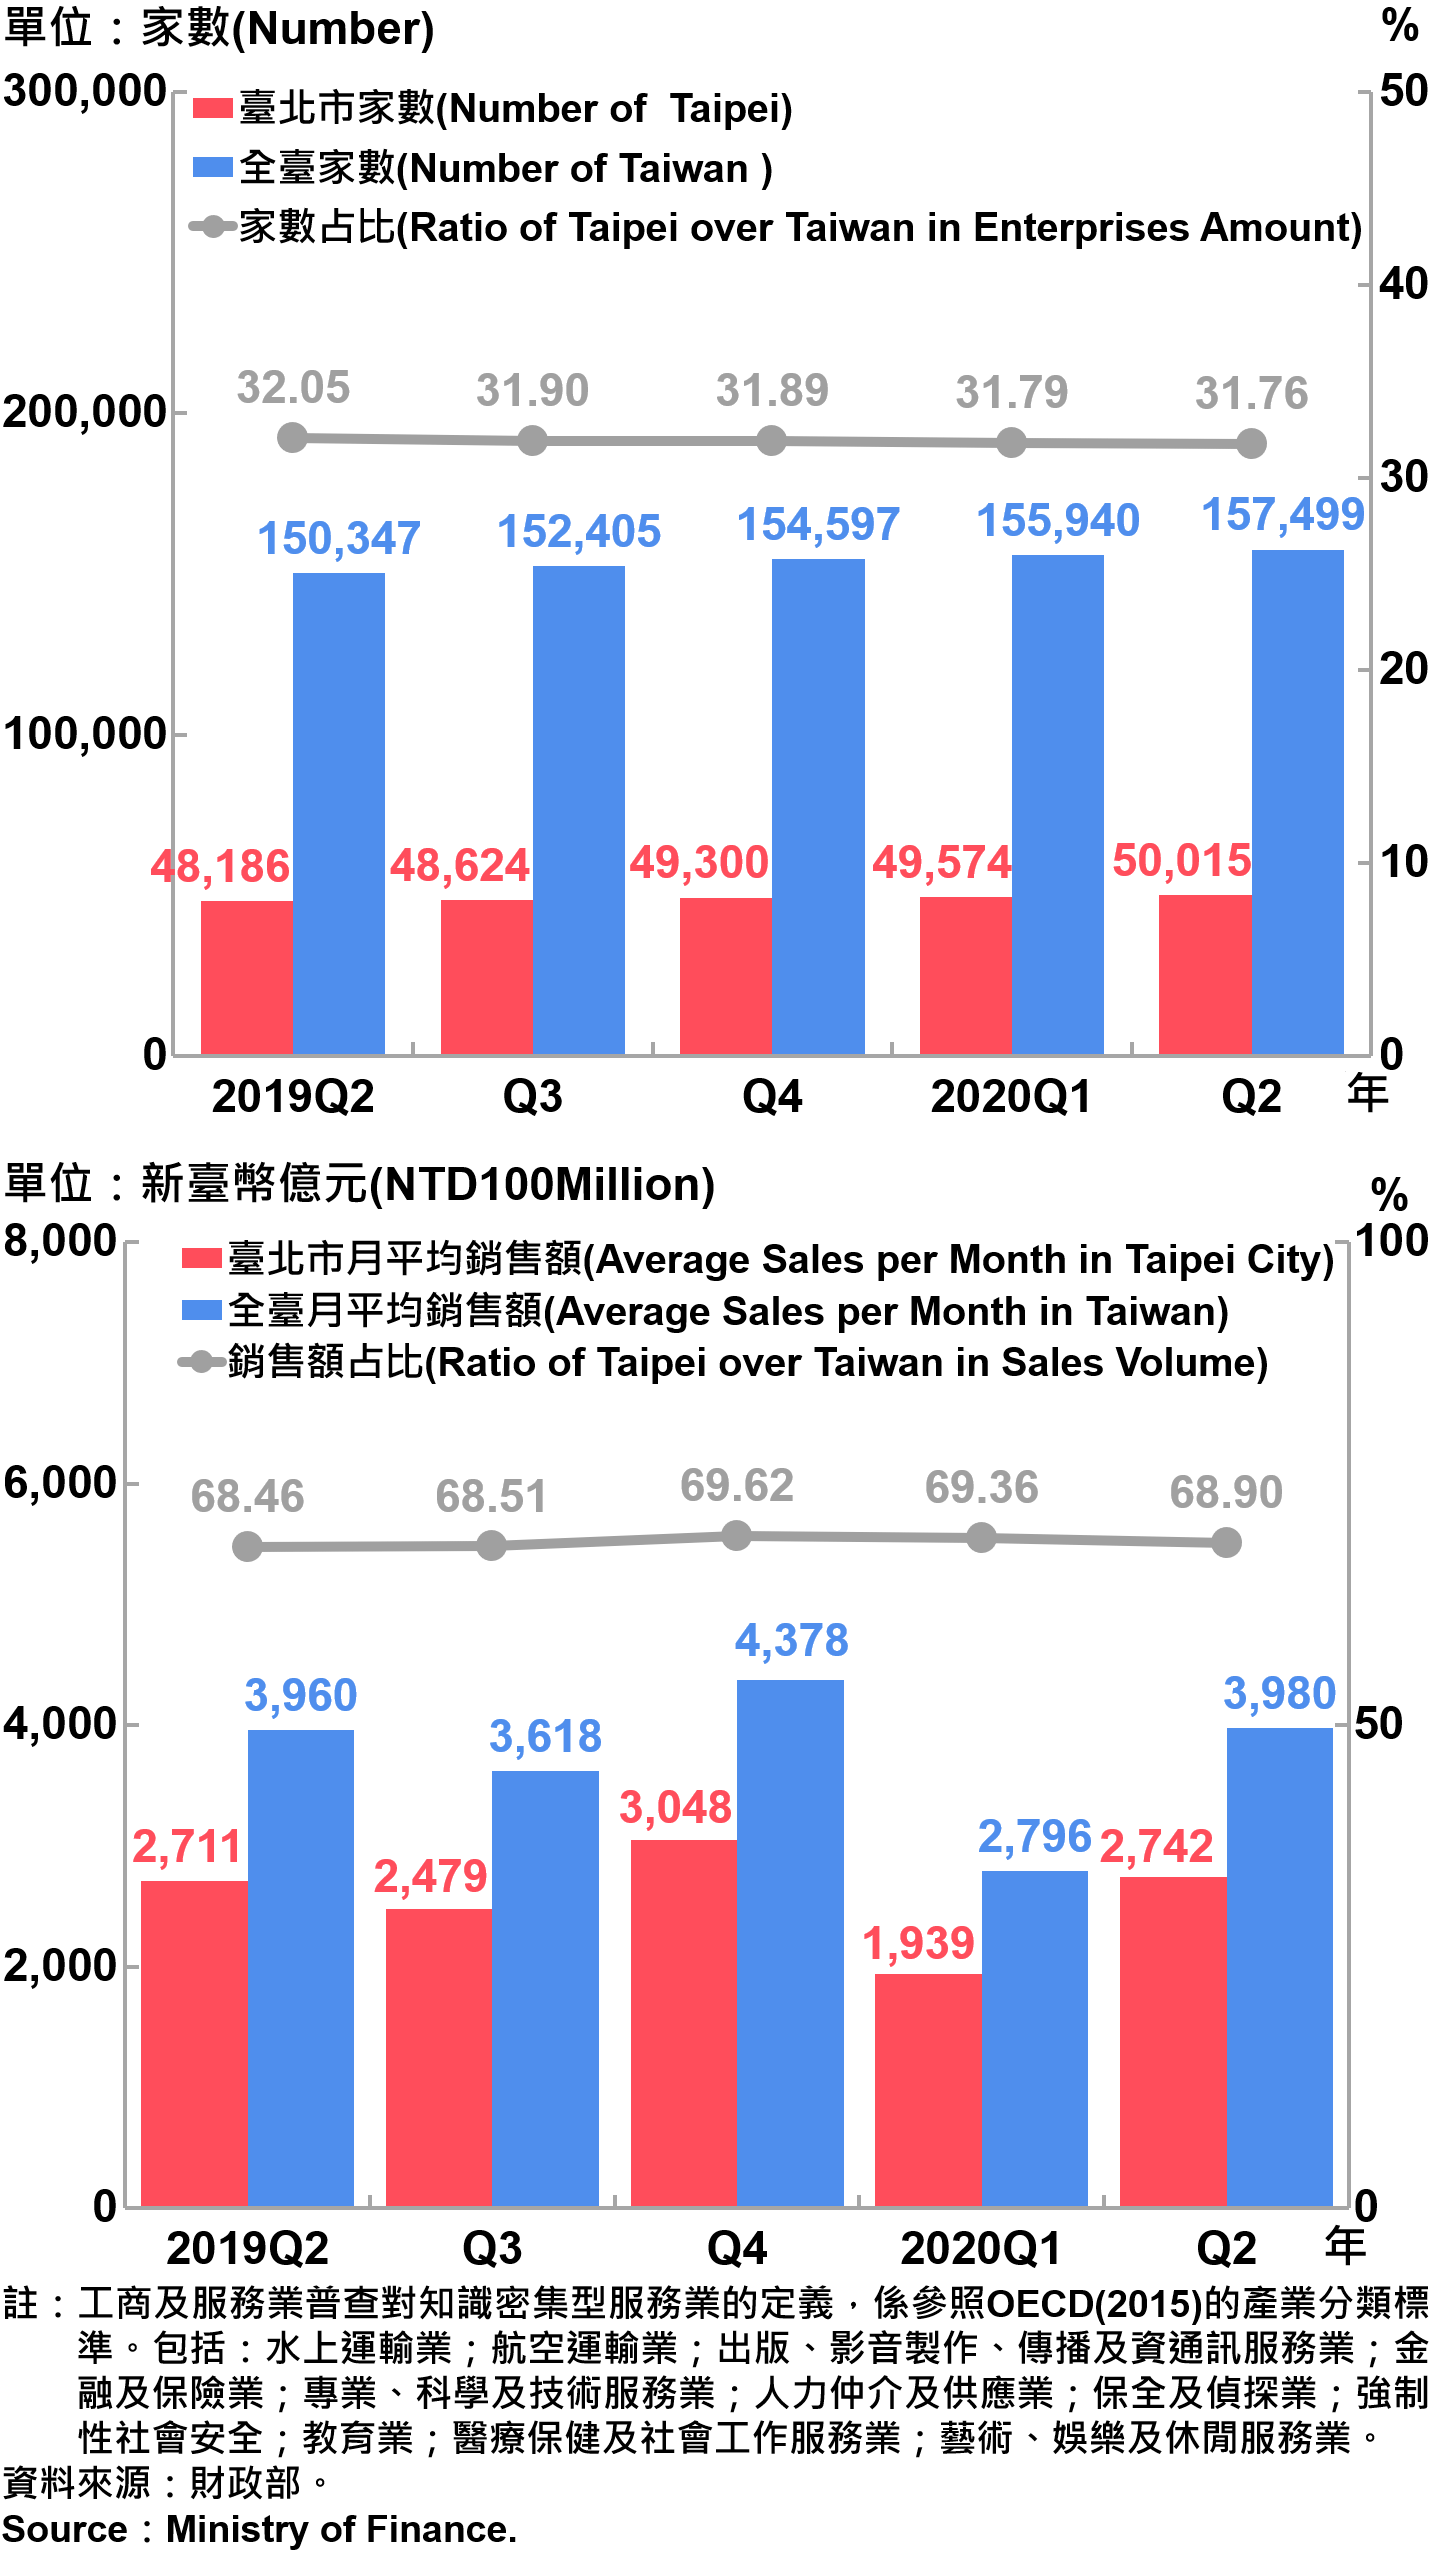 臺北市知識密集型服務業之家數及銷售額—2020Q2 Statistics Knowledge Intensive Service Industry in Taipei City—2020Q2